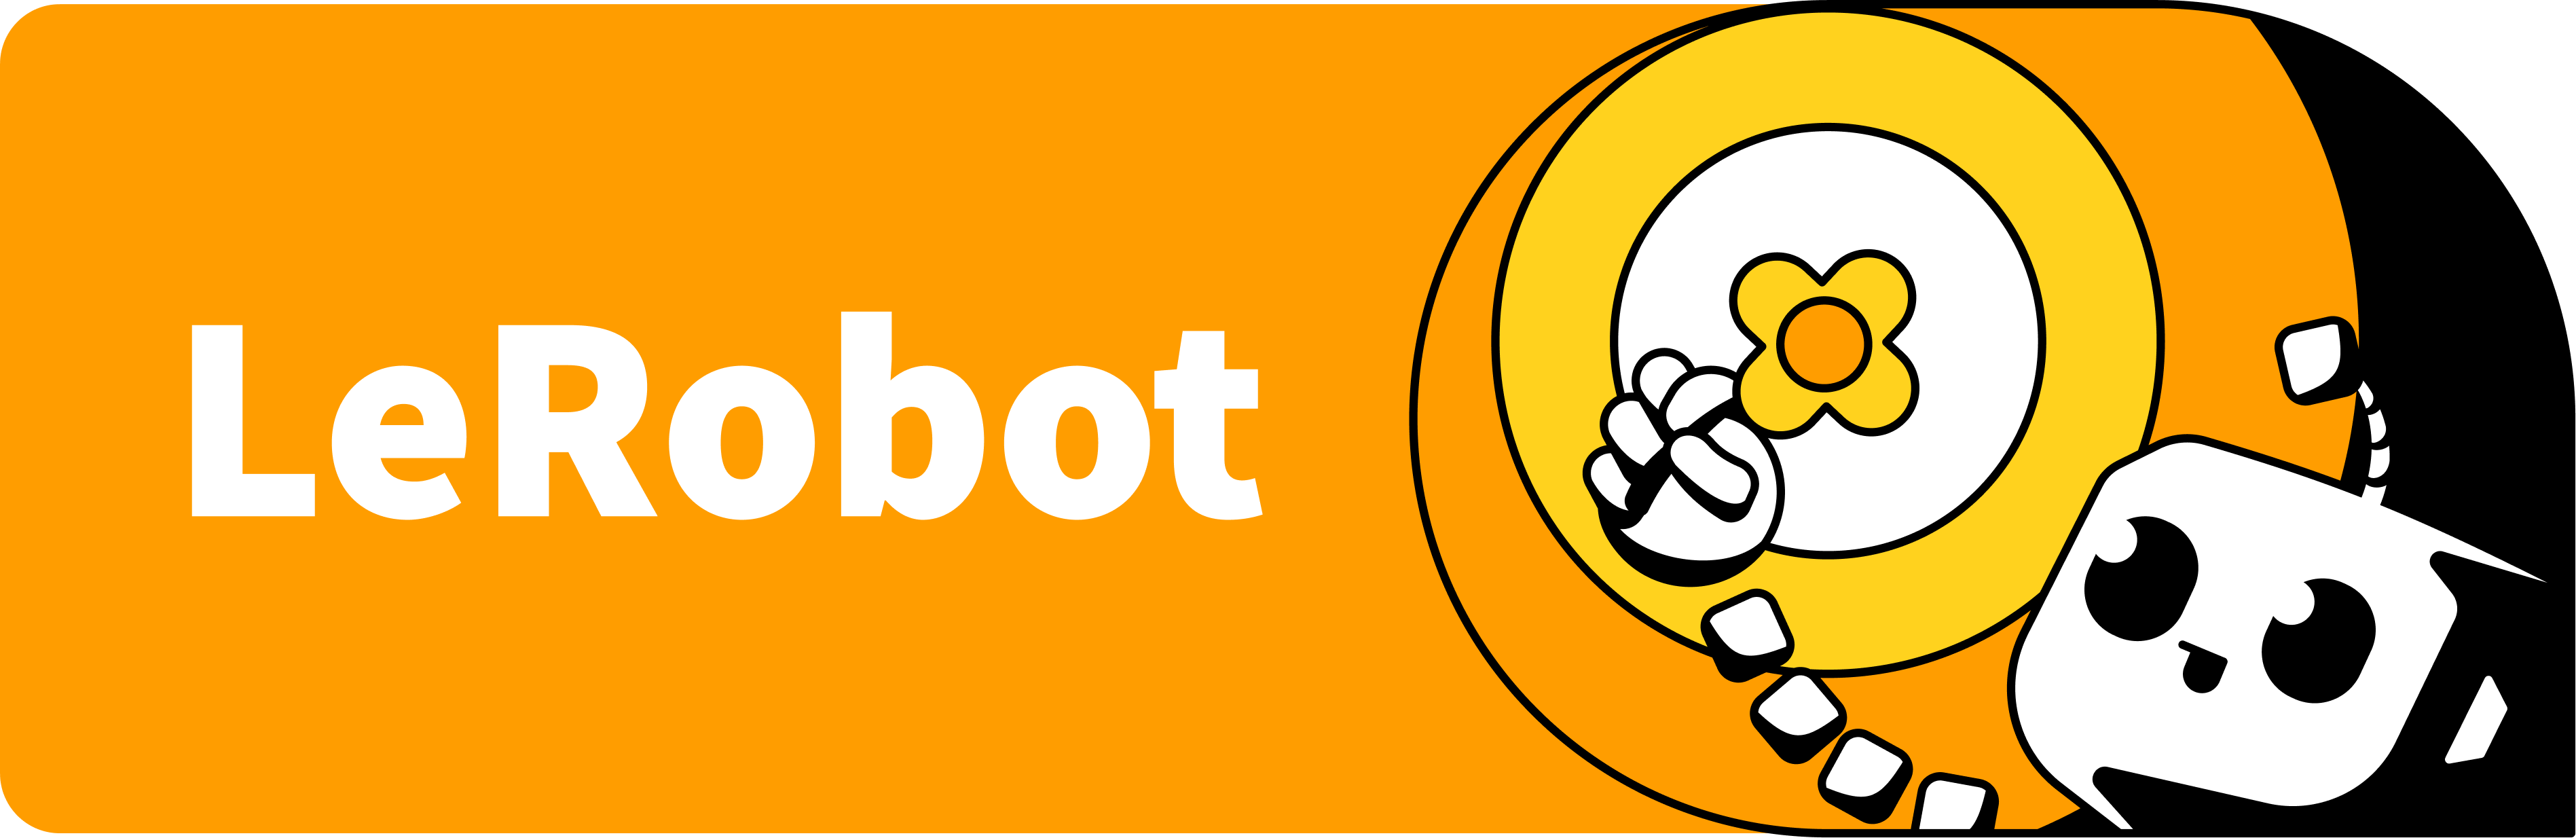 LeRobot, Hugging Face Robotics Library